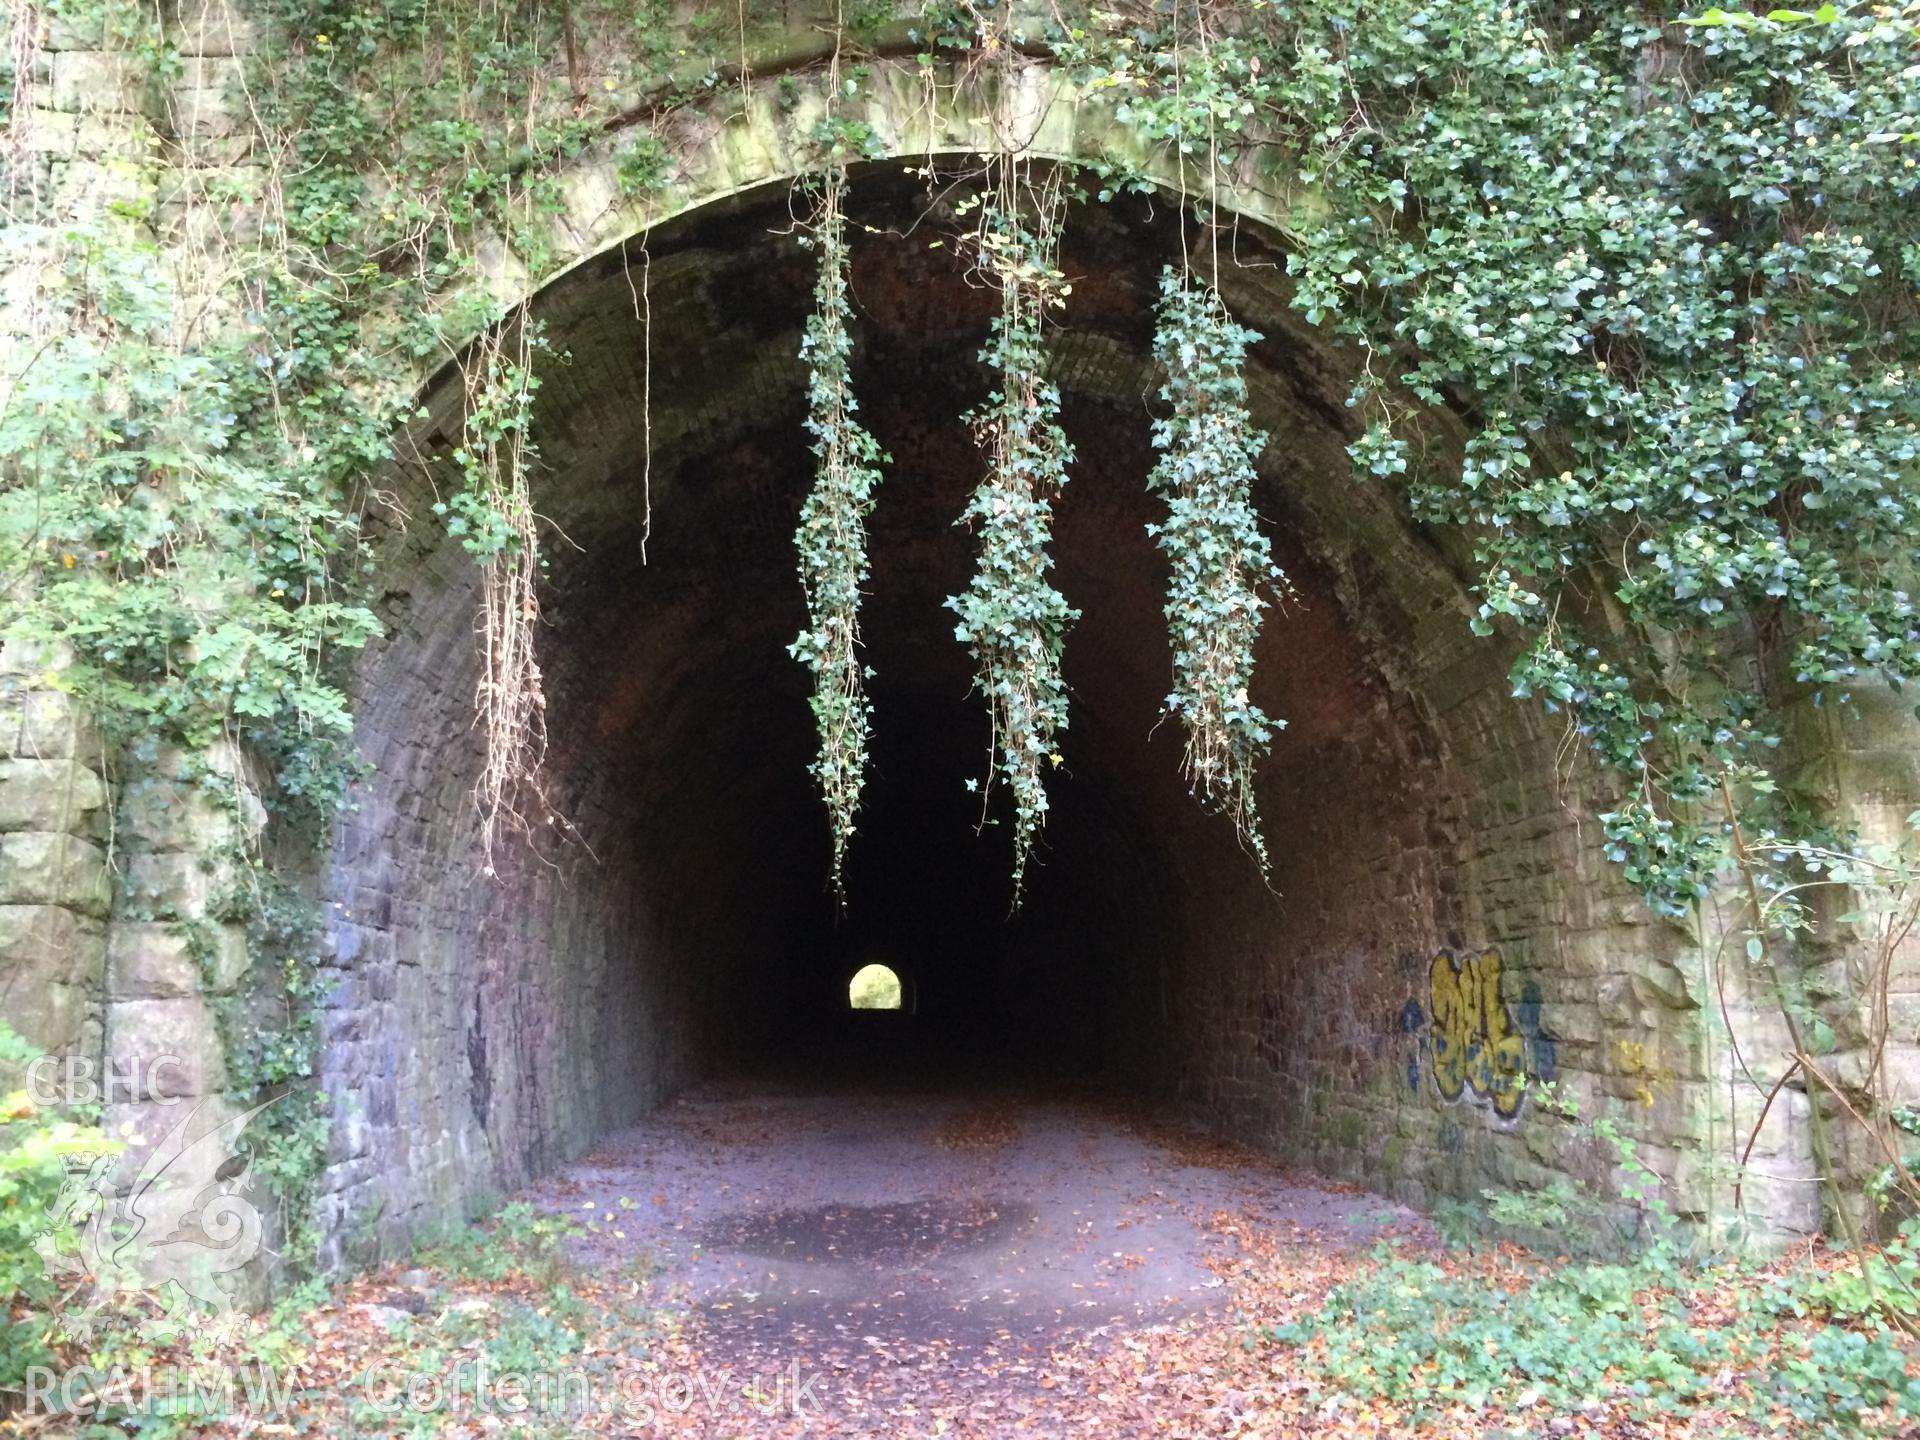 Photo showing Usk Tunnel, taken by Paul R. Davis, October 2017.